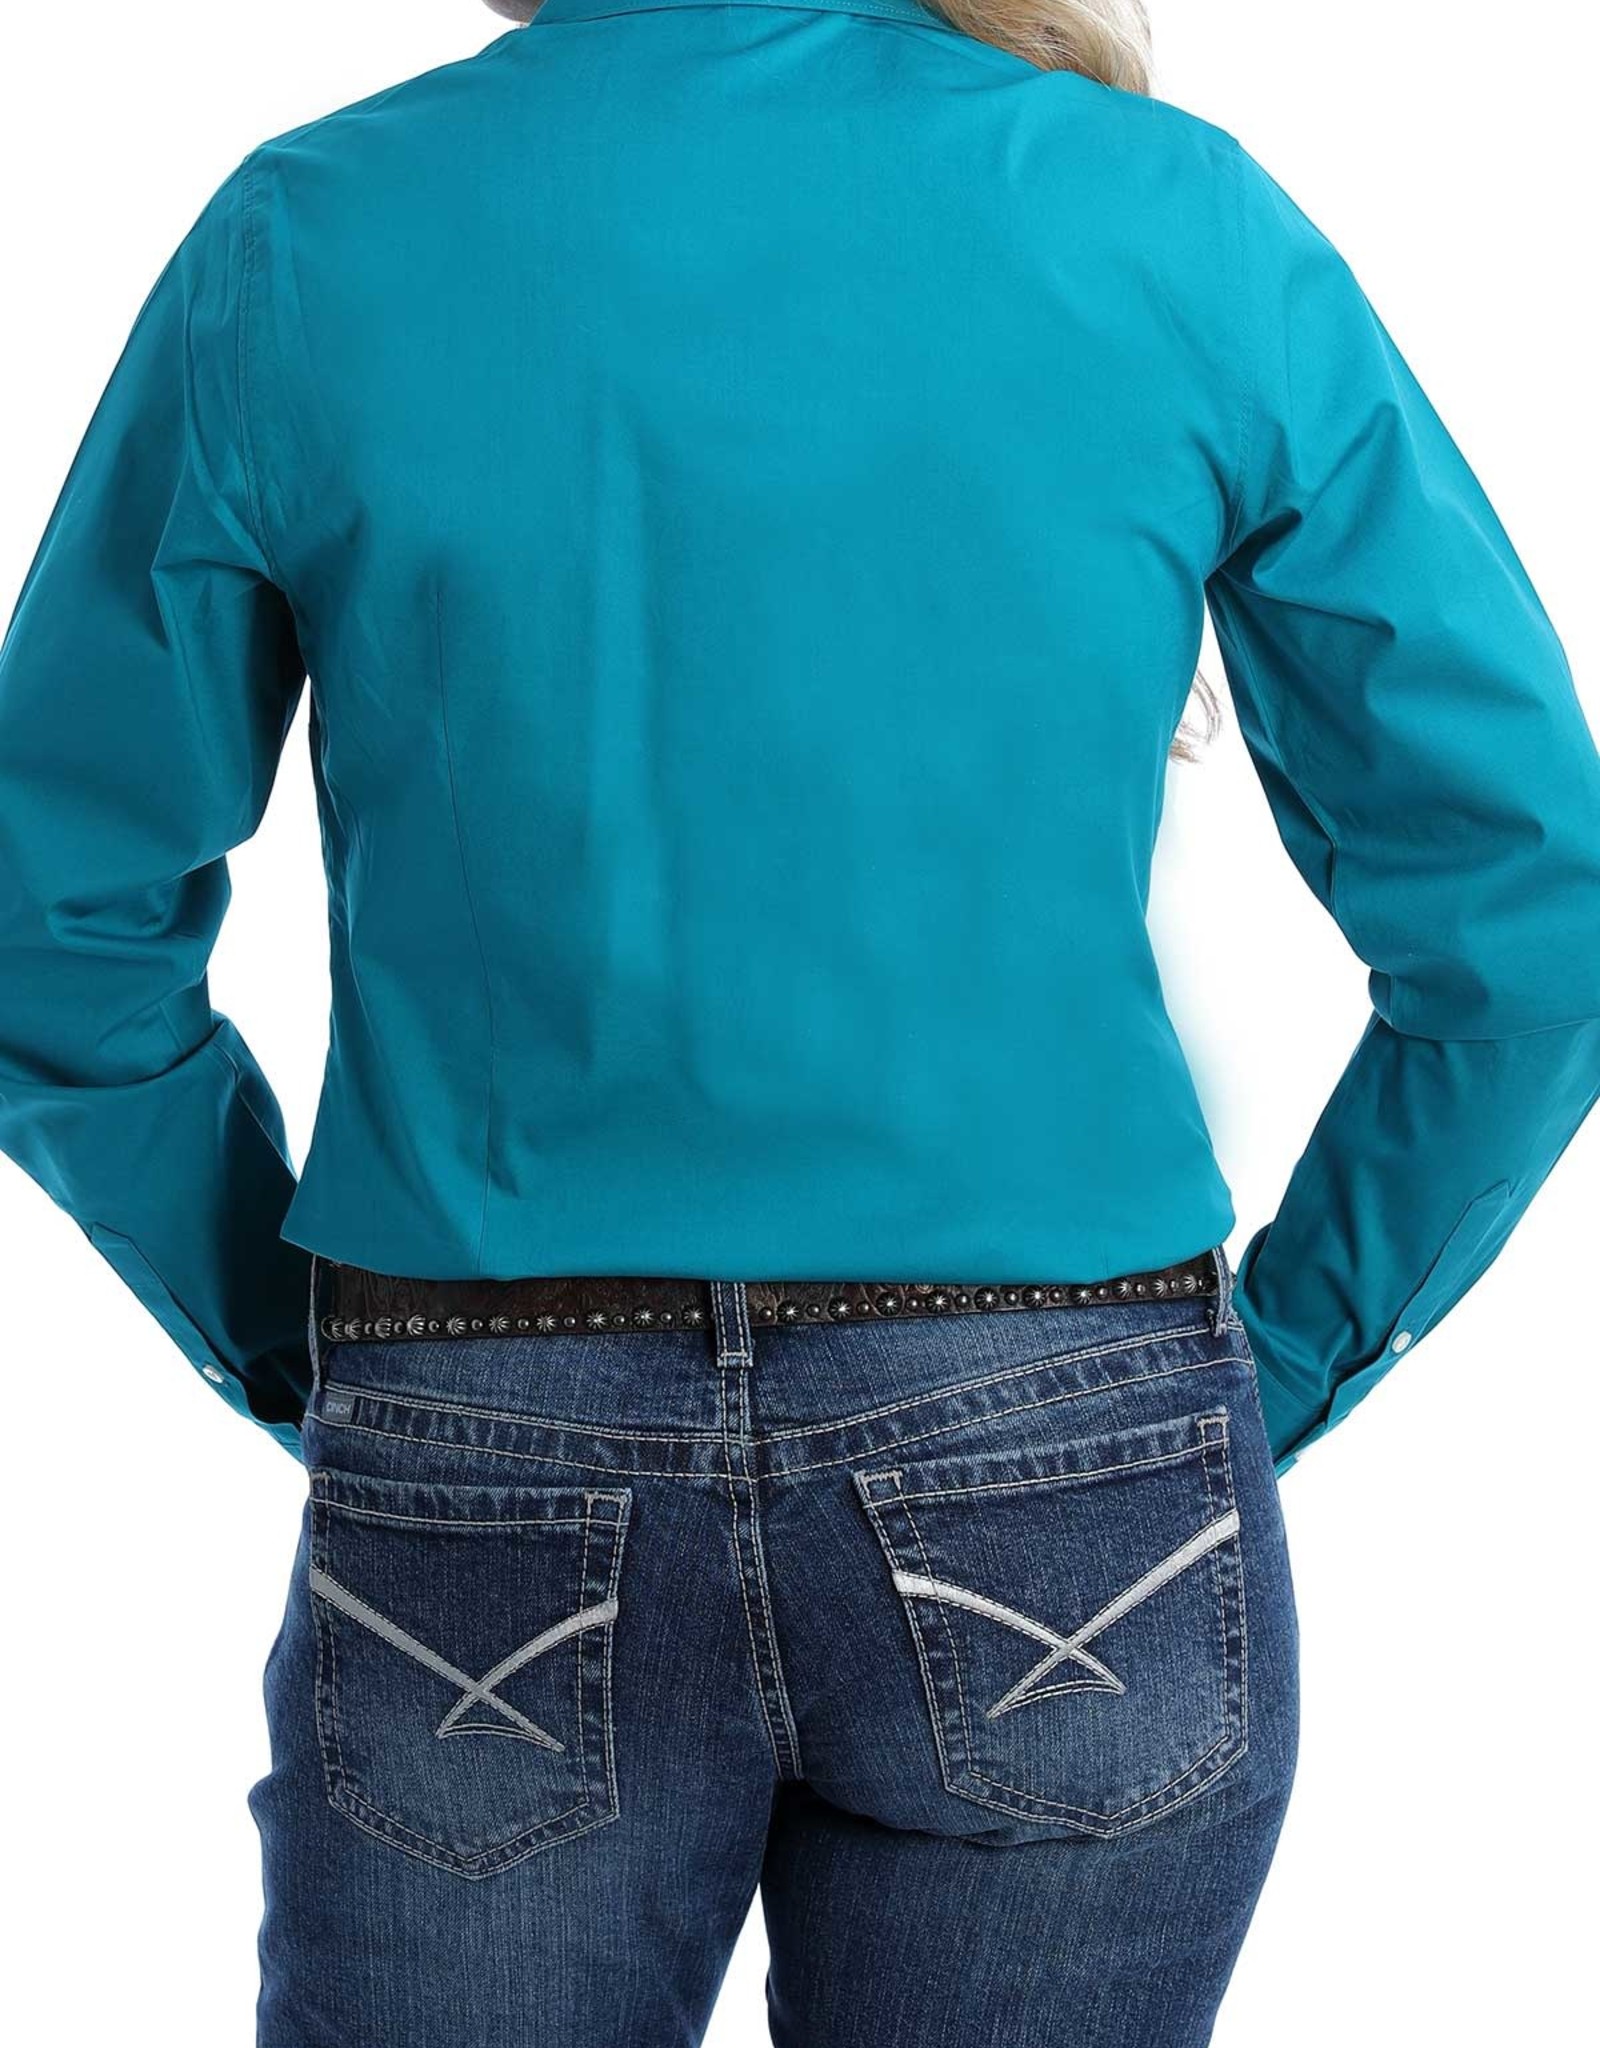 Cinch Womens Cinch Long Sleeve Solid Teal Button Down Western Shirt